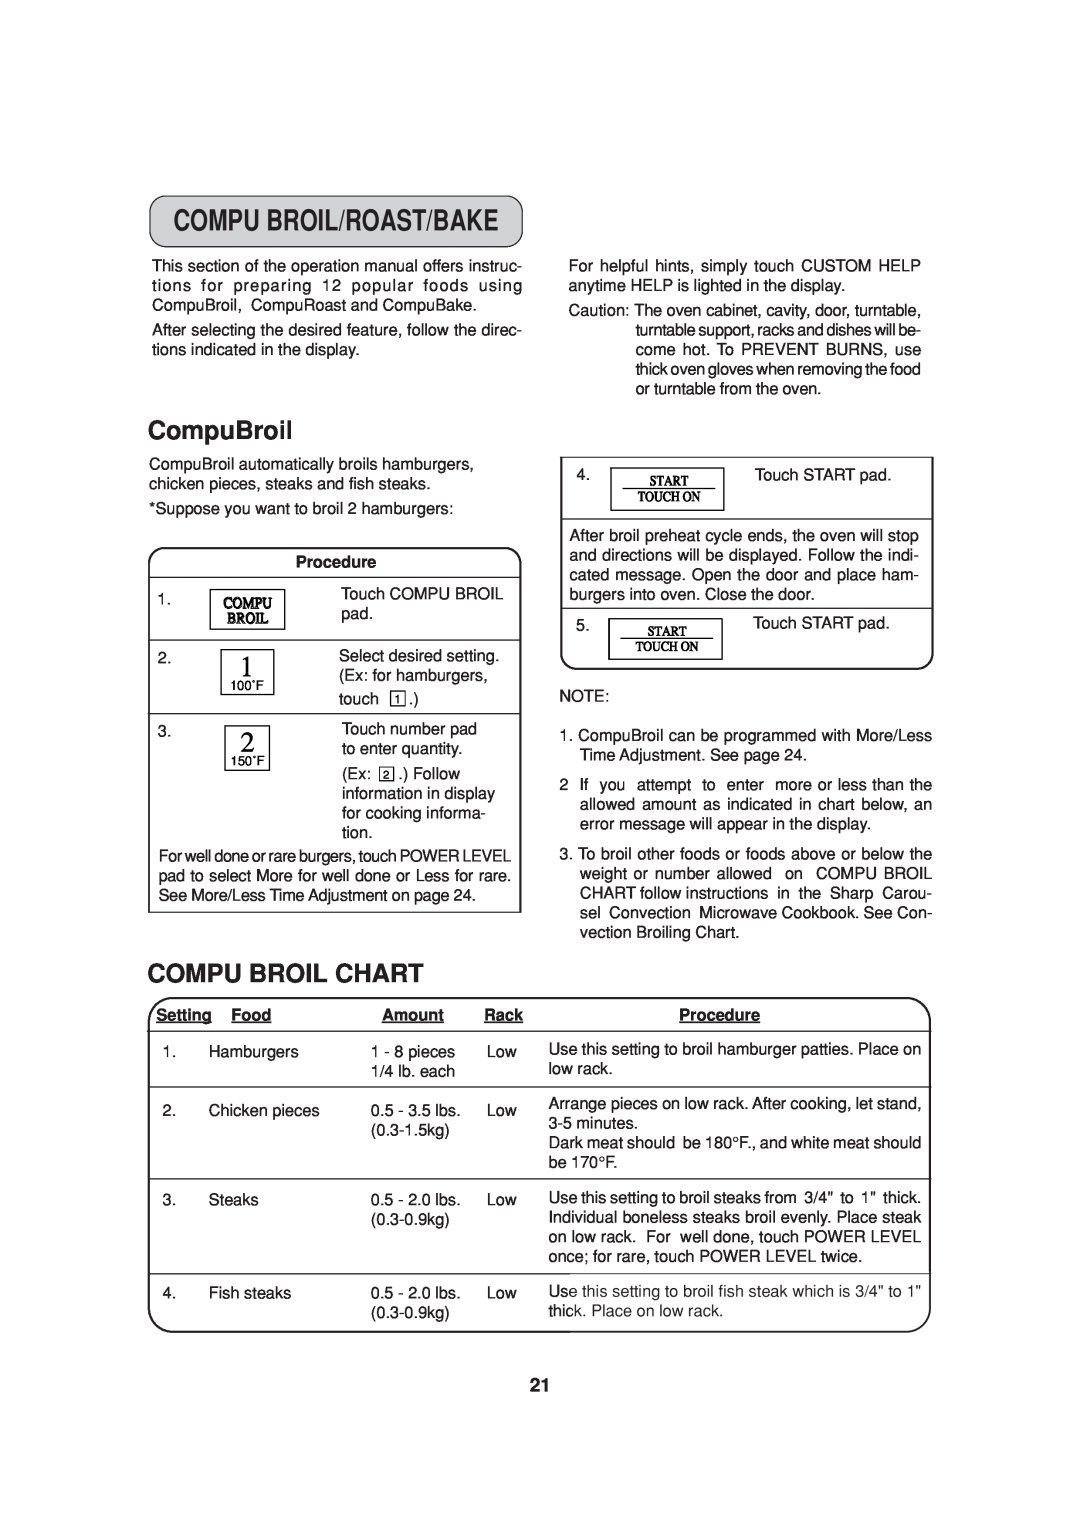 Sharp R-930CS Compu Broil/Roast/Bake, CompuBroil, Compu Broil Chart, Procedure, Touch START pad, Setting Food, Amount 